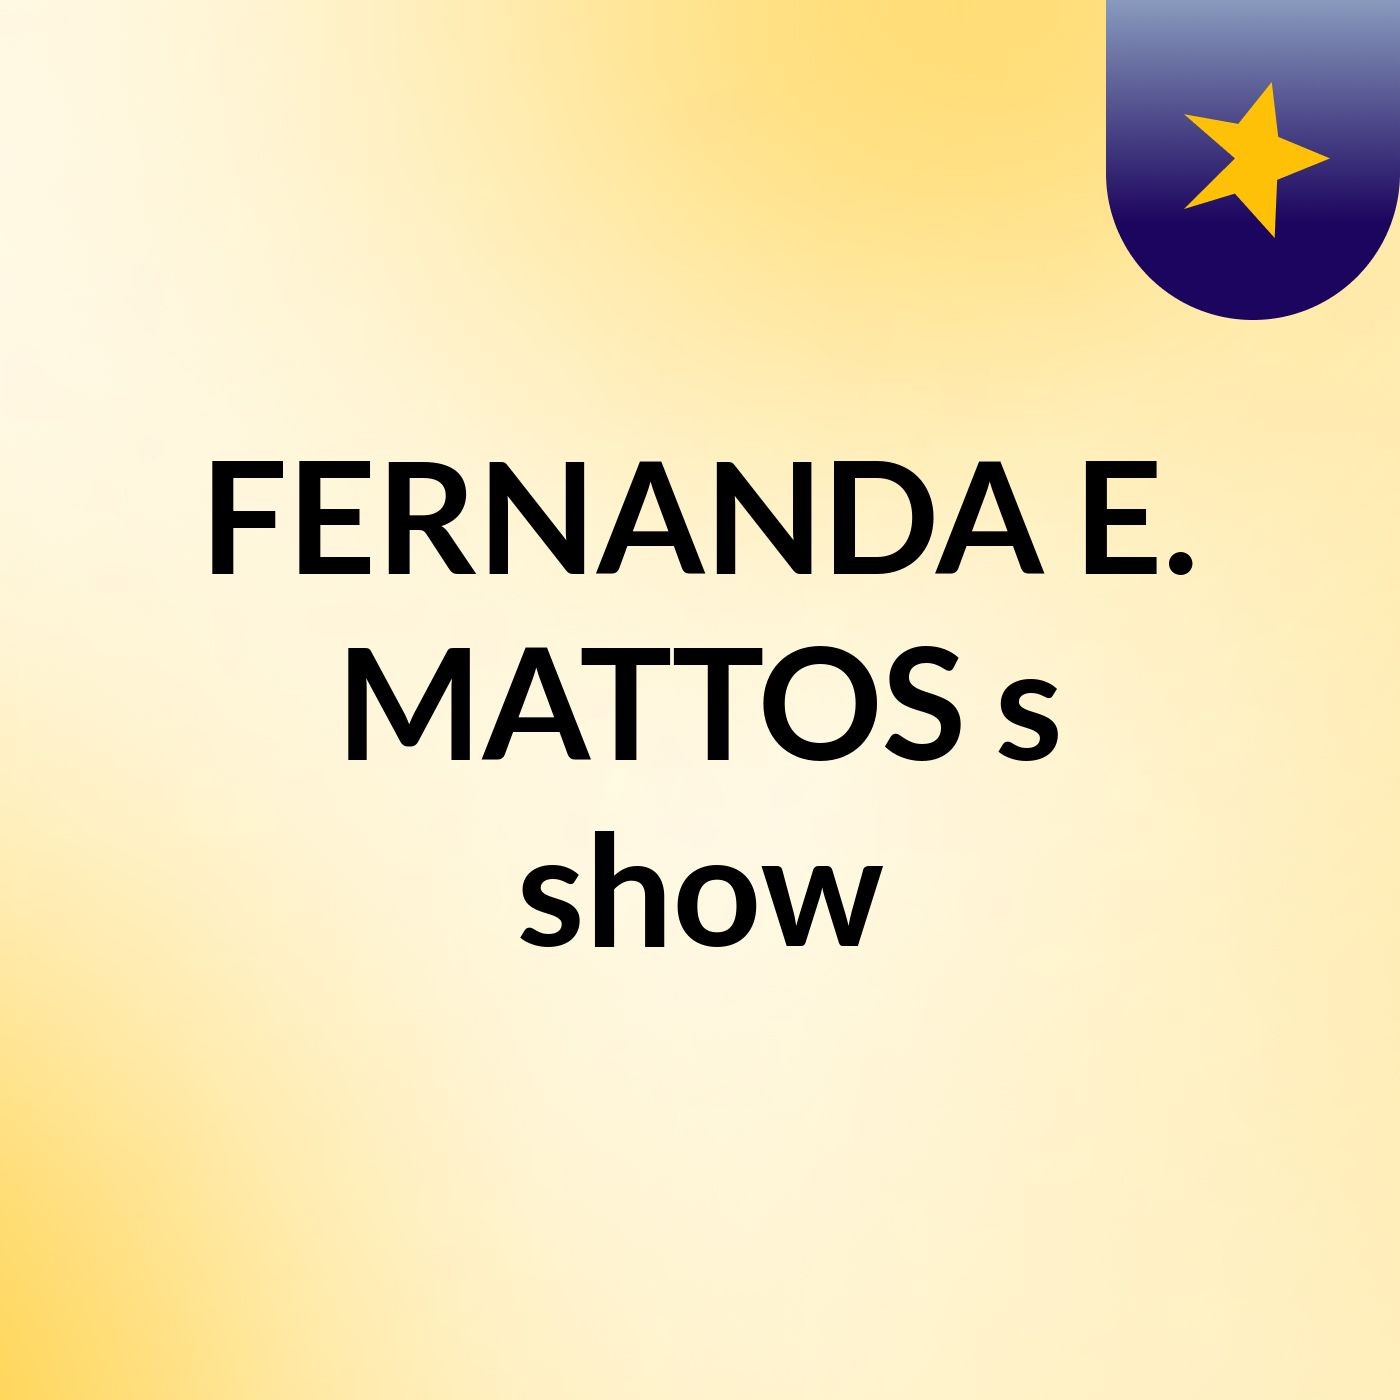 FERNANDA E. MATTOS's show